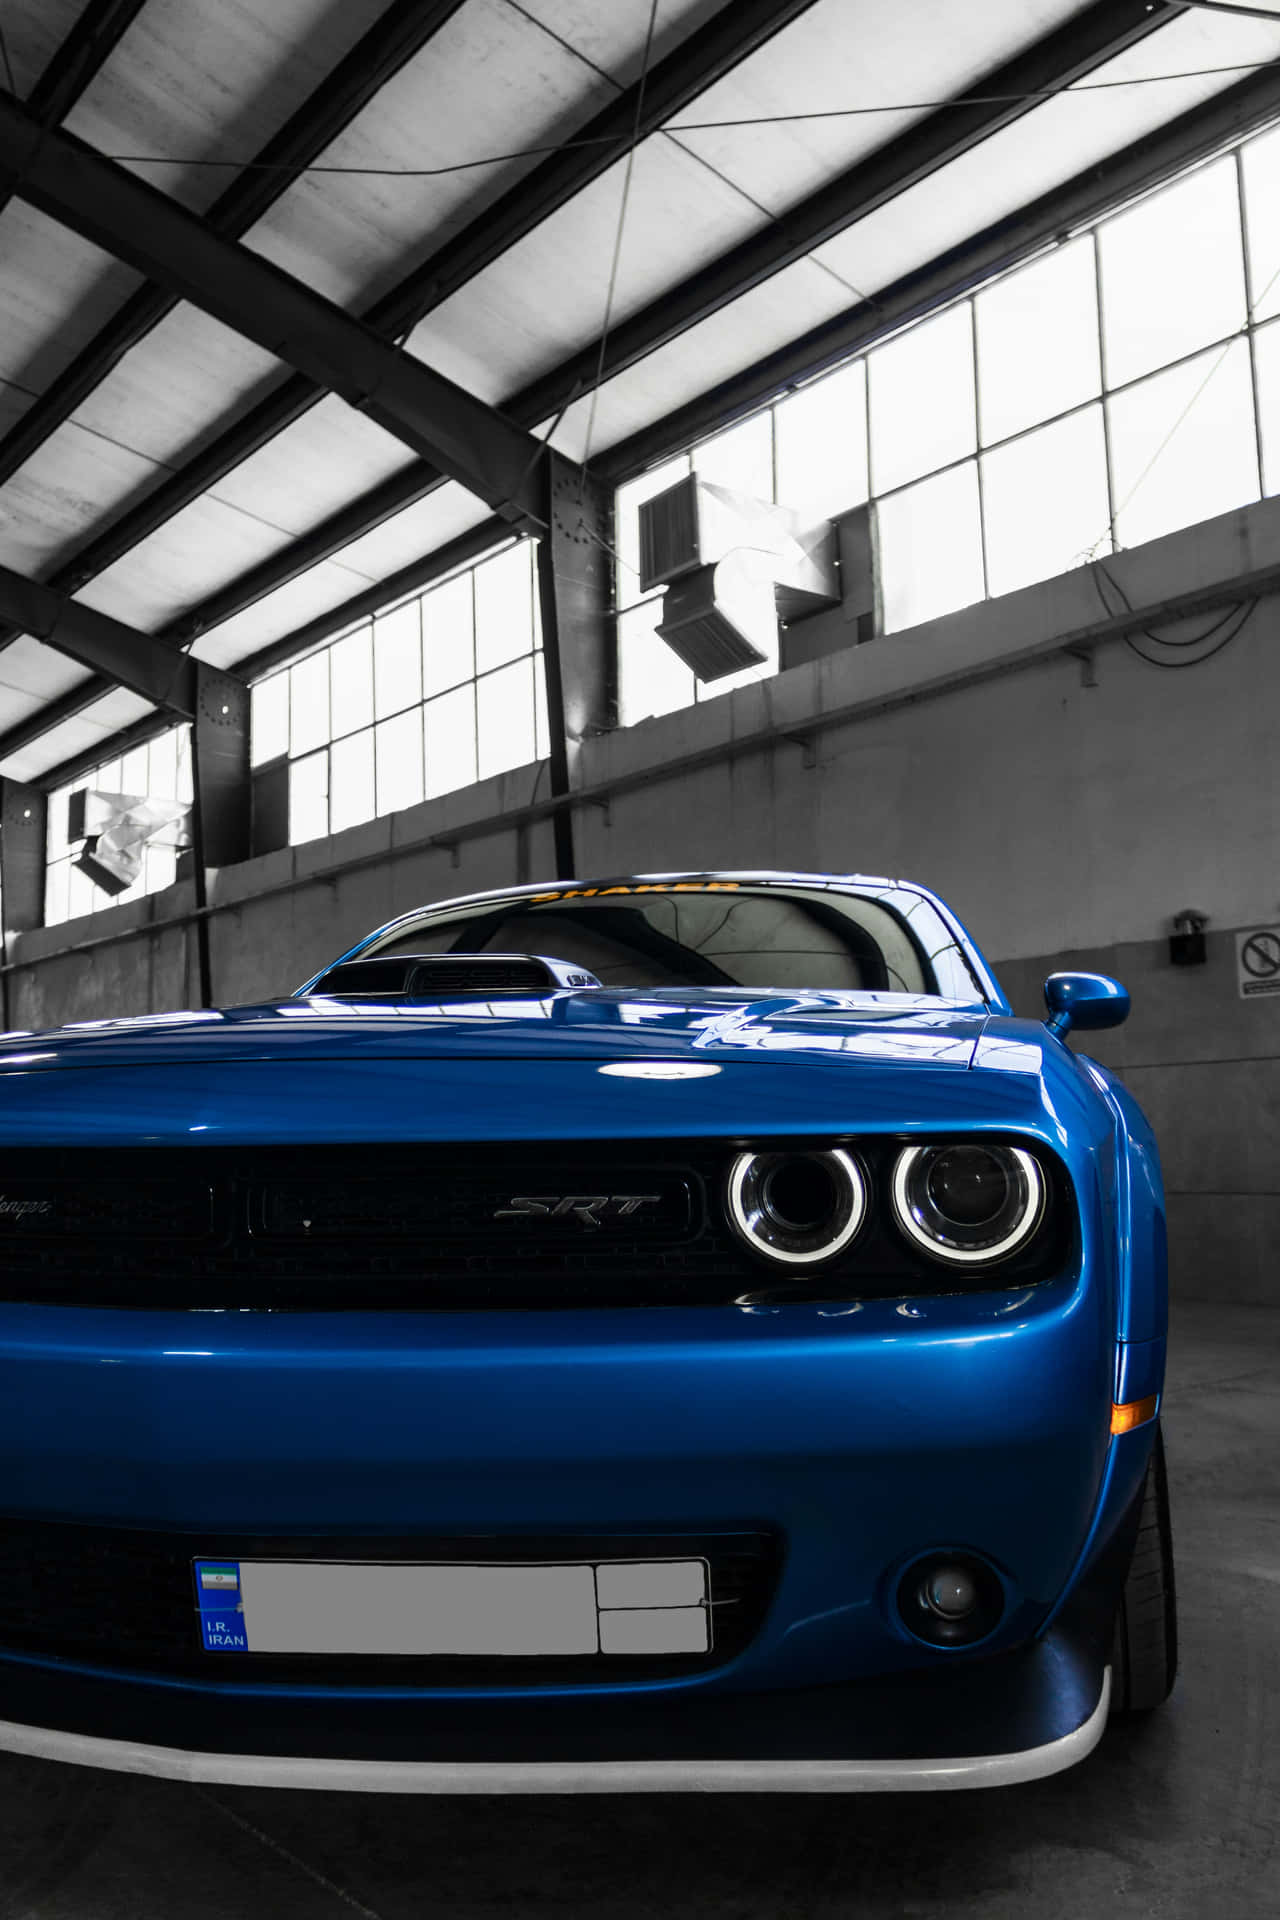 Blue Dodge Challenger S R Tin Garage.jpg Wallpaper